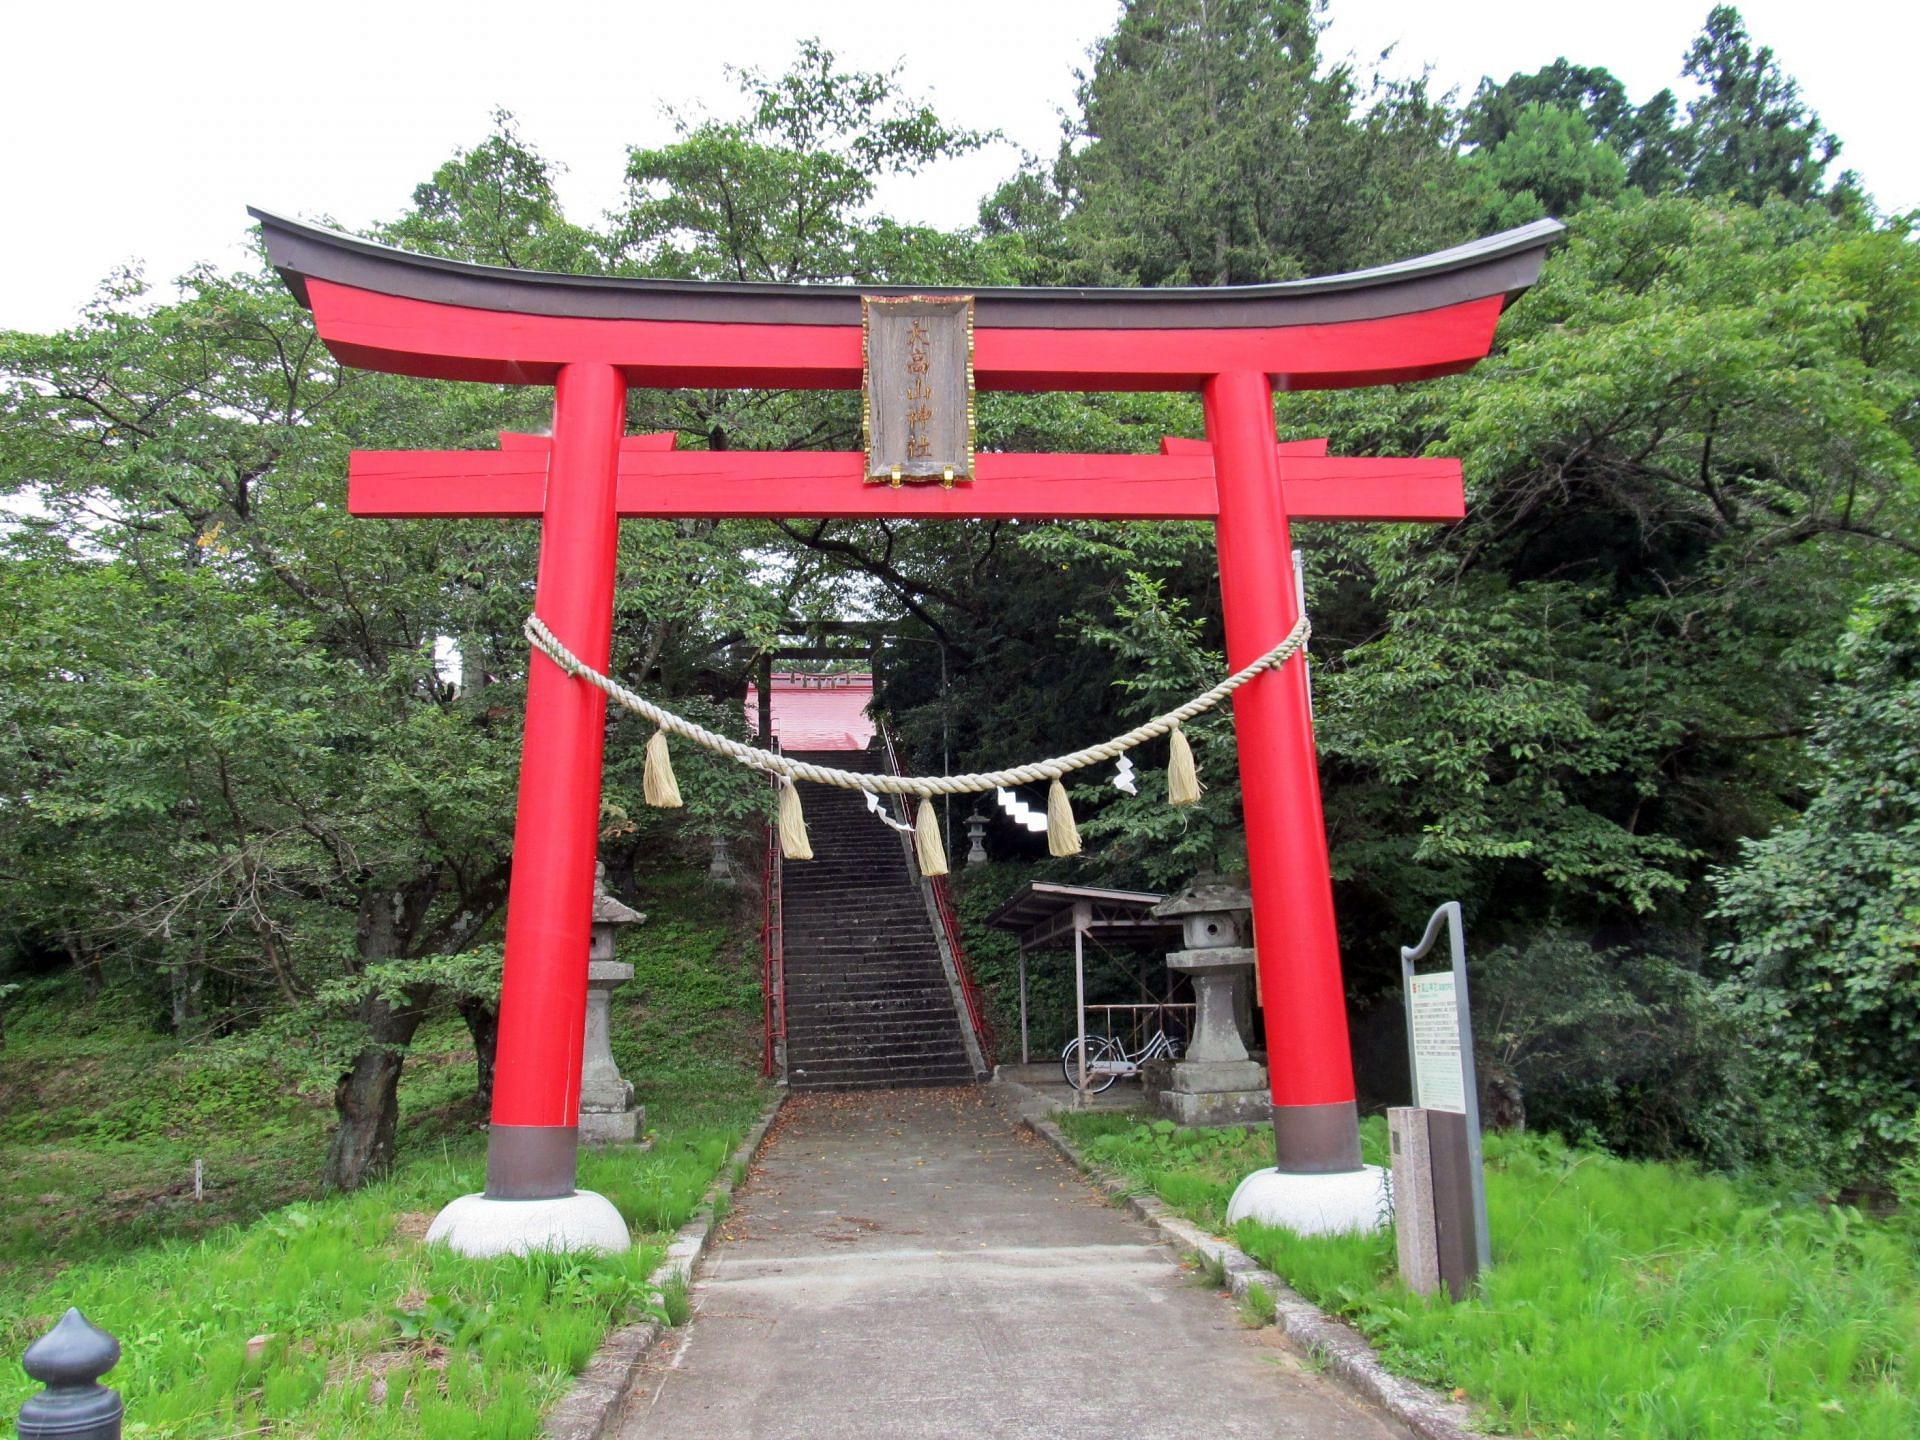 Torii gate (image via Wikimedia Commons/Bachstelze)